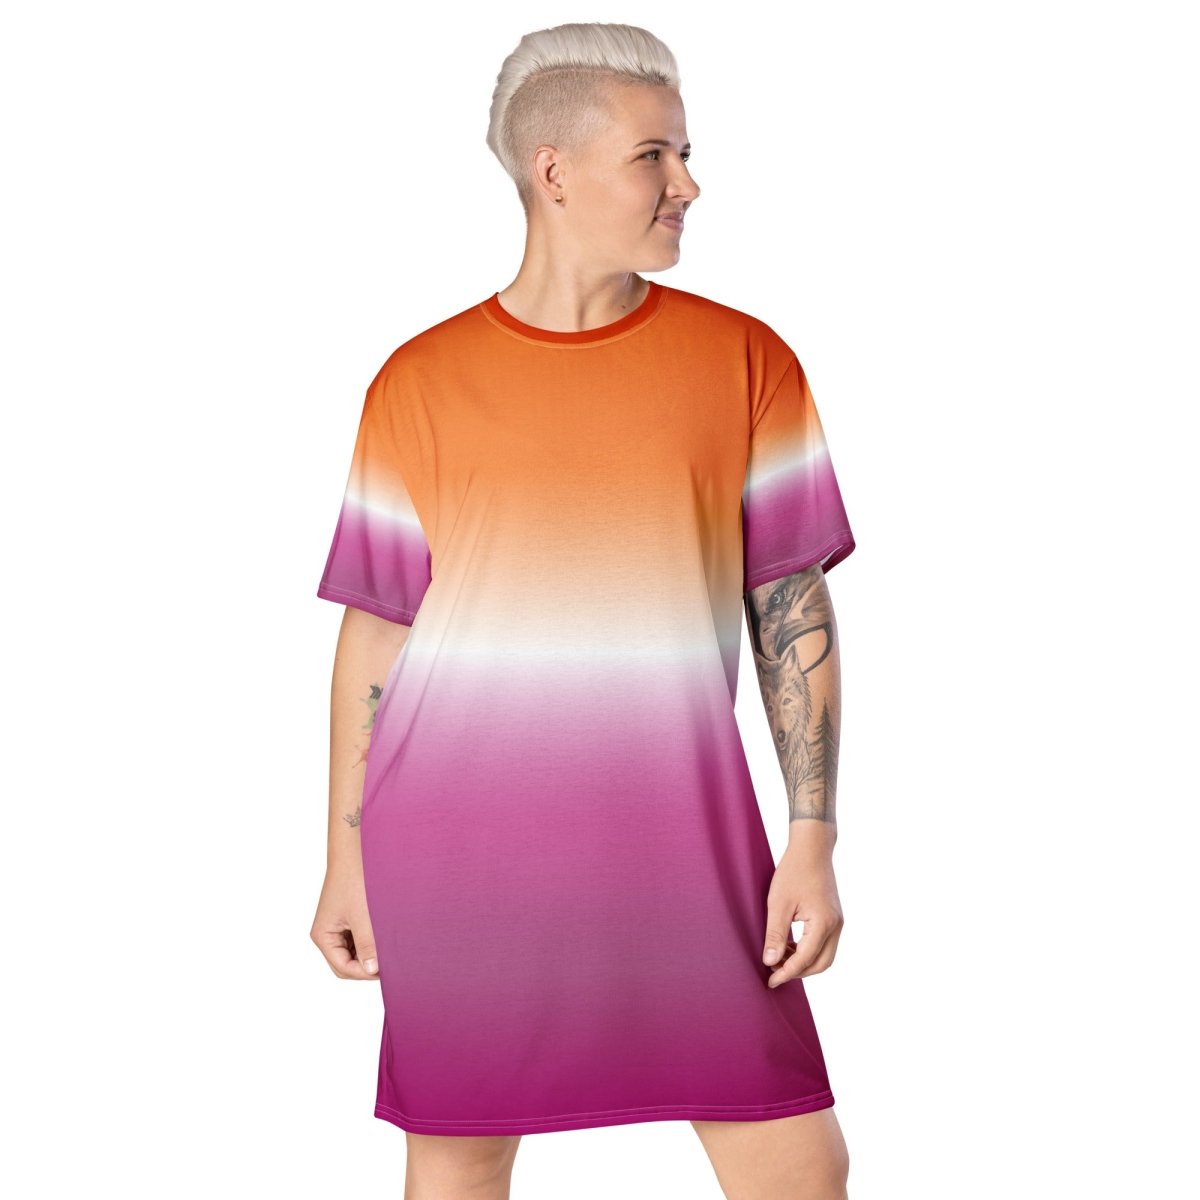 Ombré Lesbian Flag Dress - On Trend Shirts